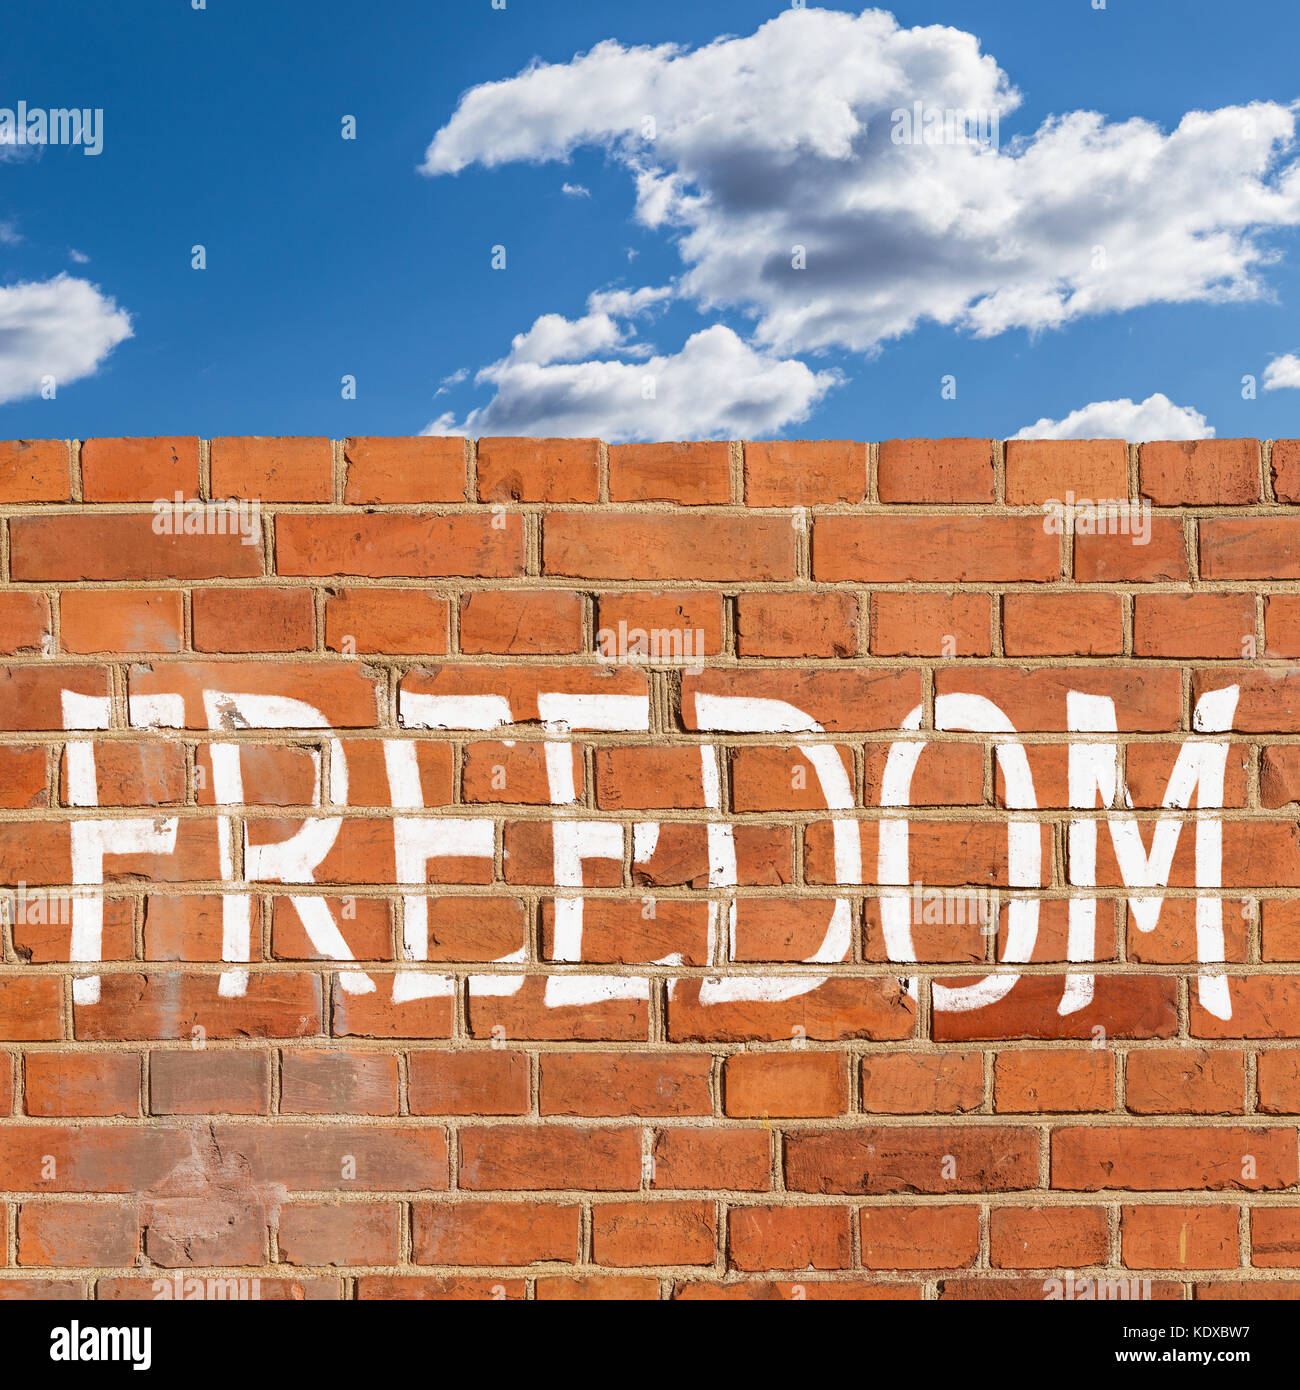 Abstract brick wall obstructing freedom Stock Photo